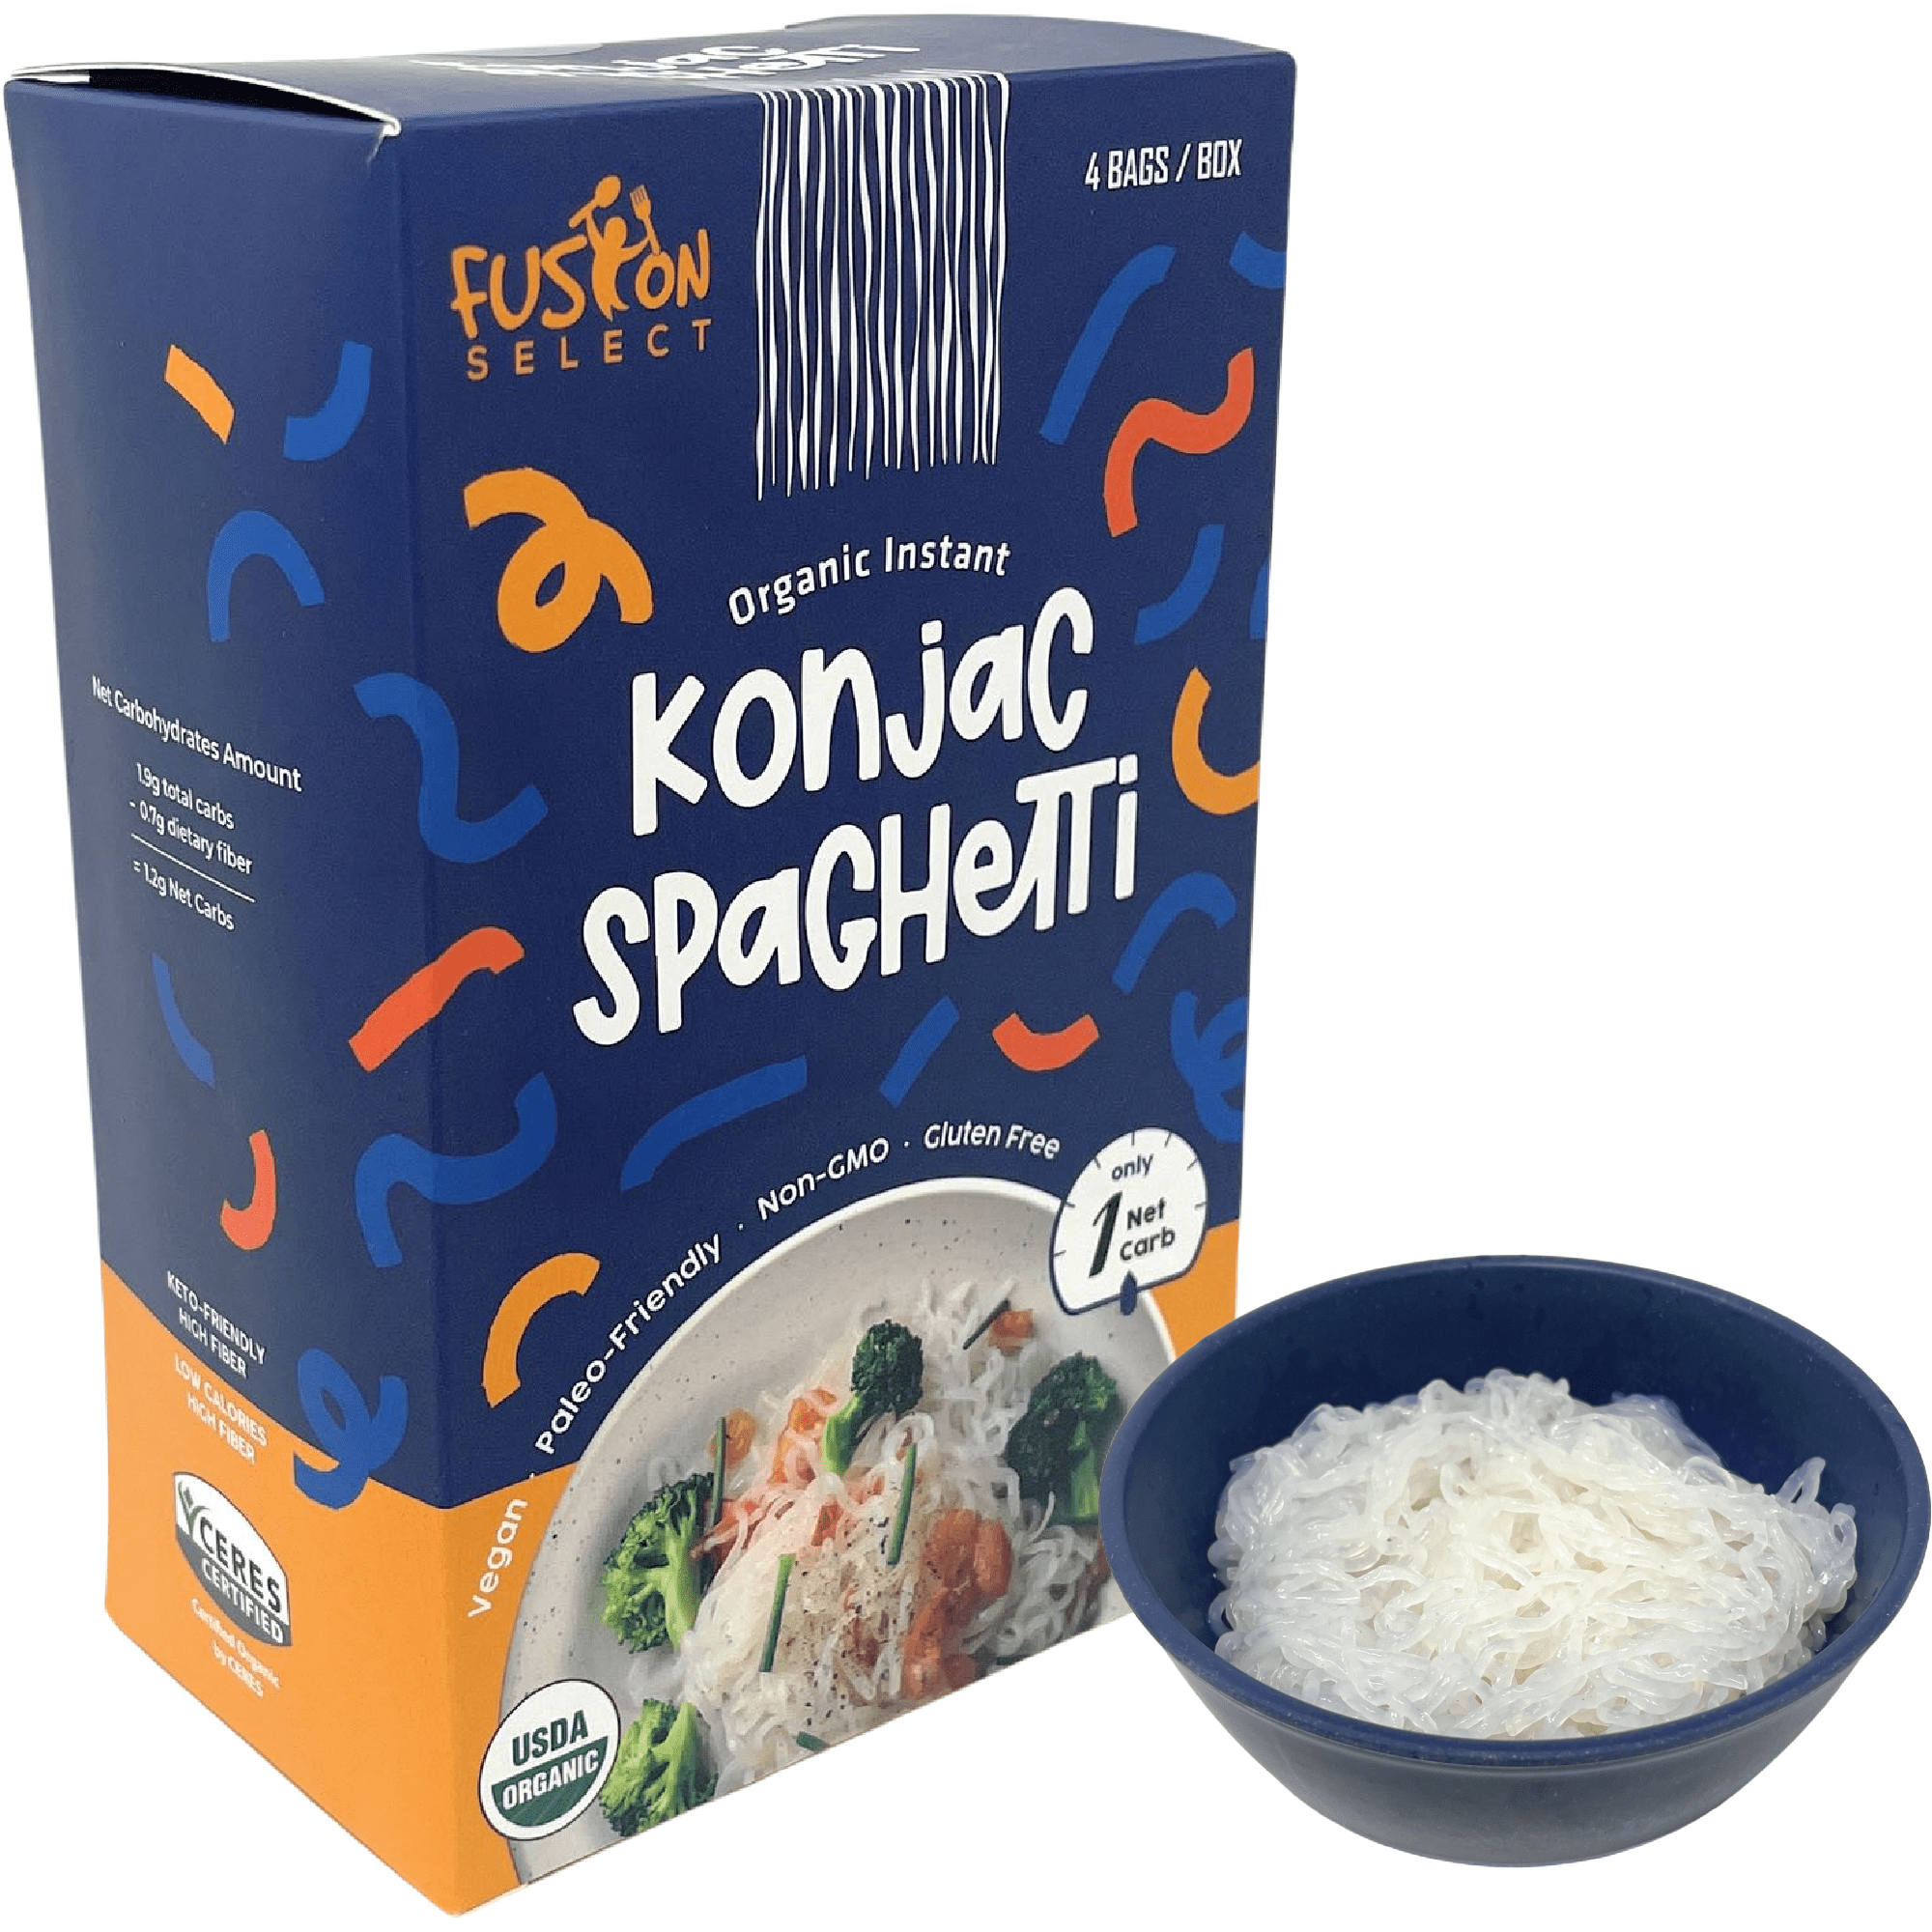  It's Skinny Organic Variety Pack - Low Carb & Keto Pasta  Noodles: Konjac & Shirataki Noodle (Angel Hair, Spaghetti, Fettuccine,  Rice)